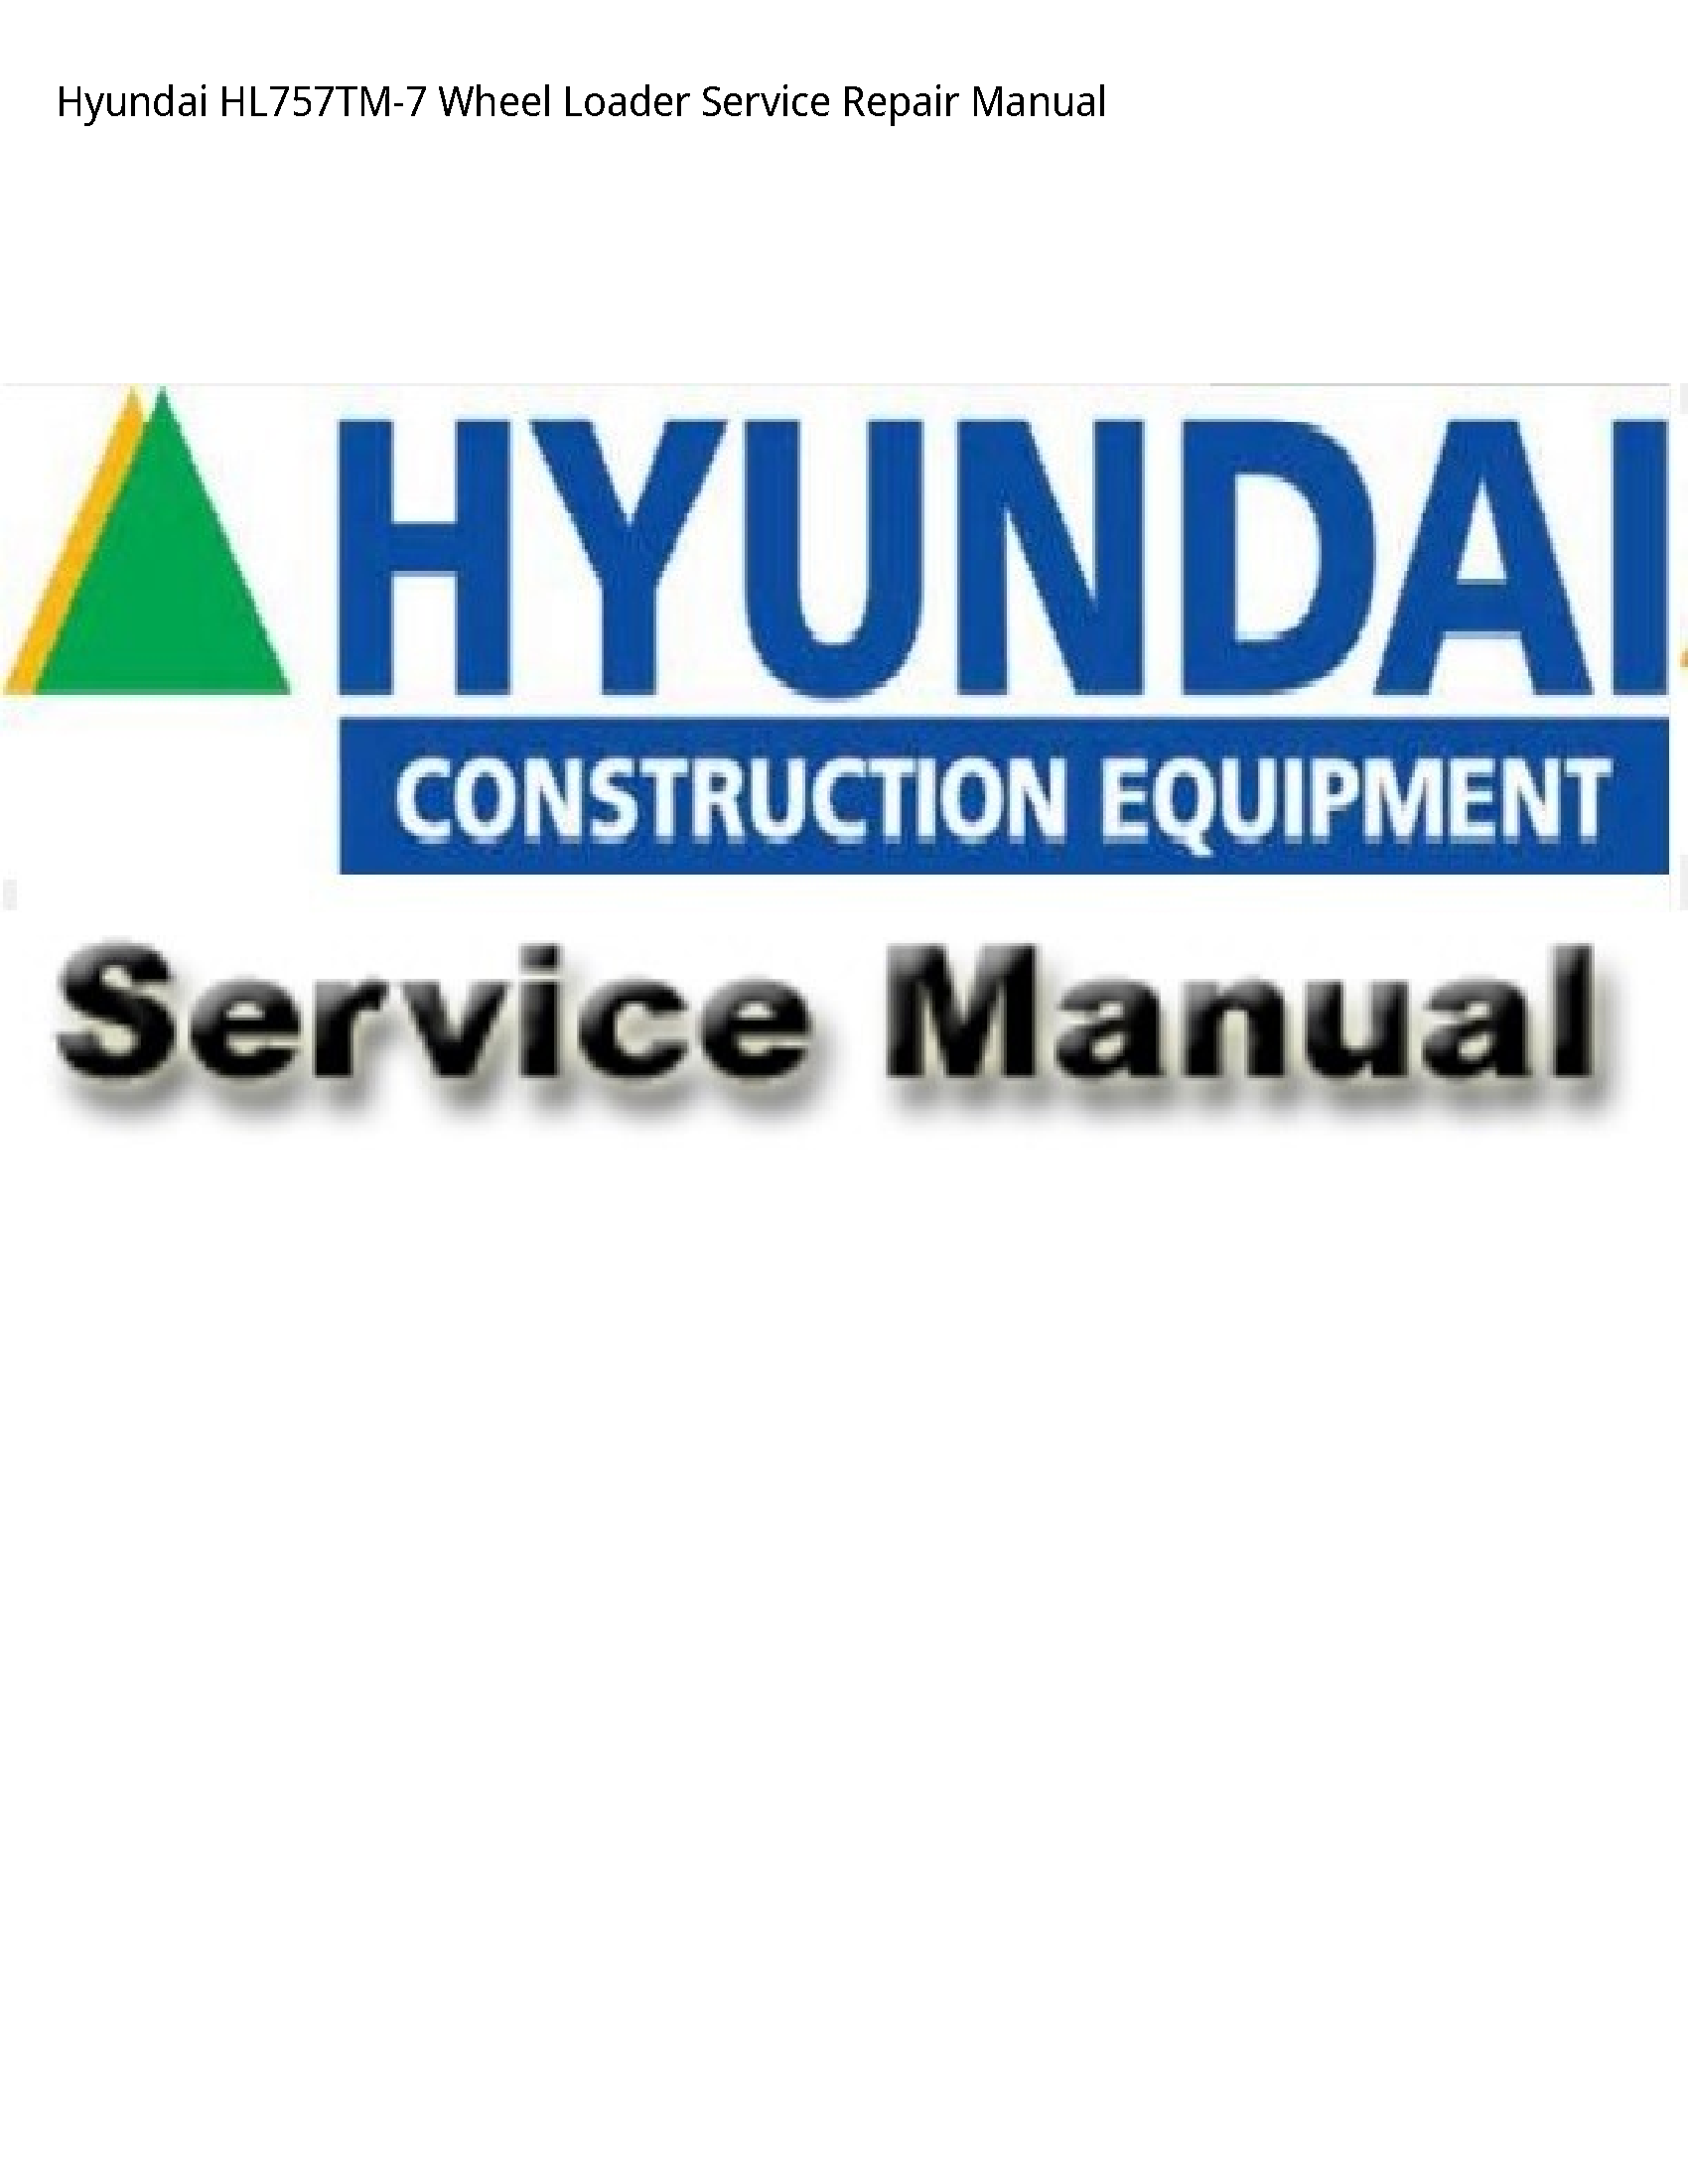 Hyundai HL757TM-7 Wheel Loader manual